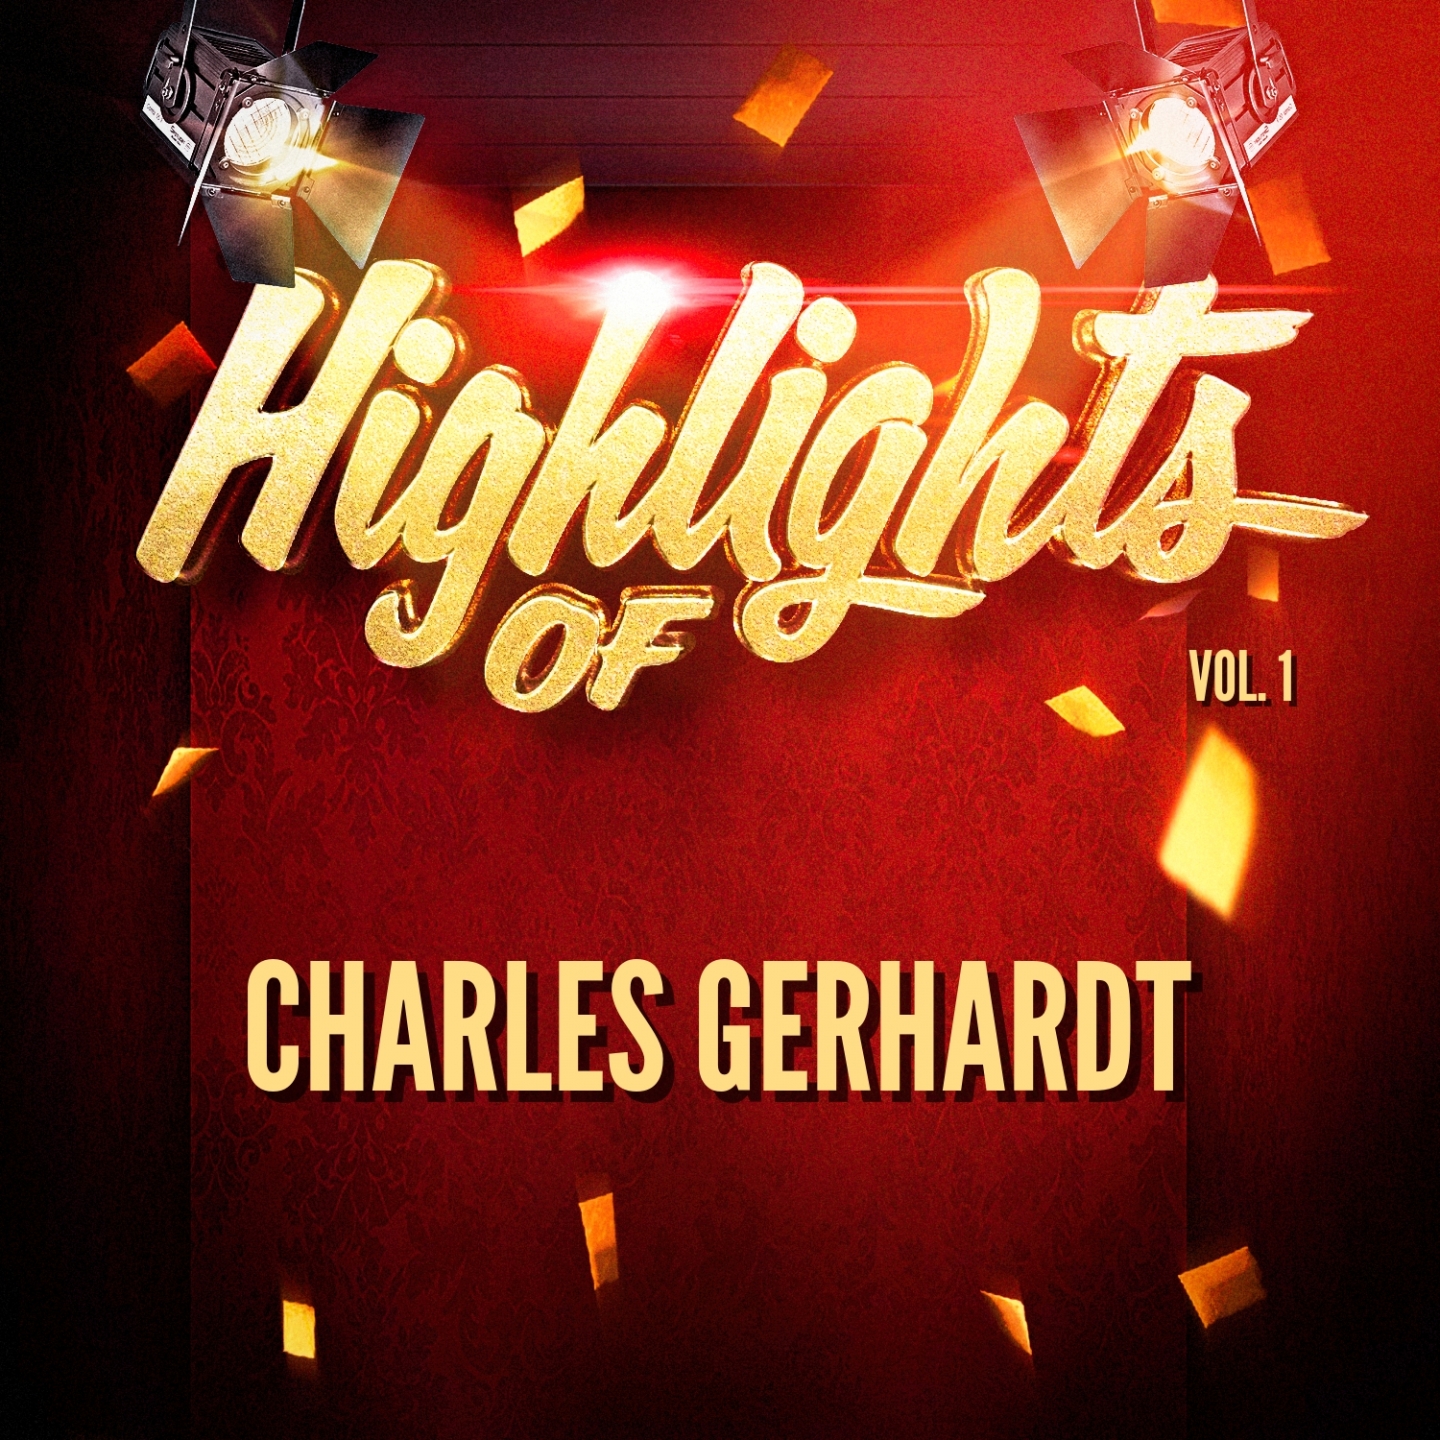 Highlights of Charles Gerhardt, Vol. 1